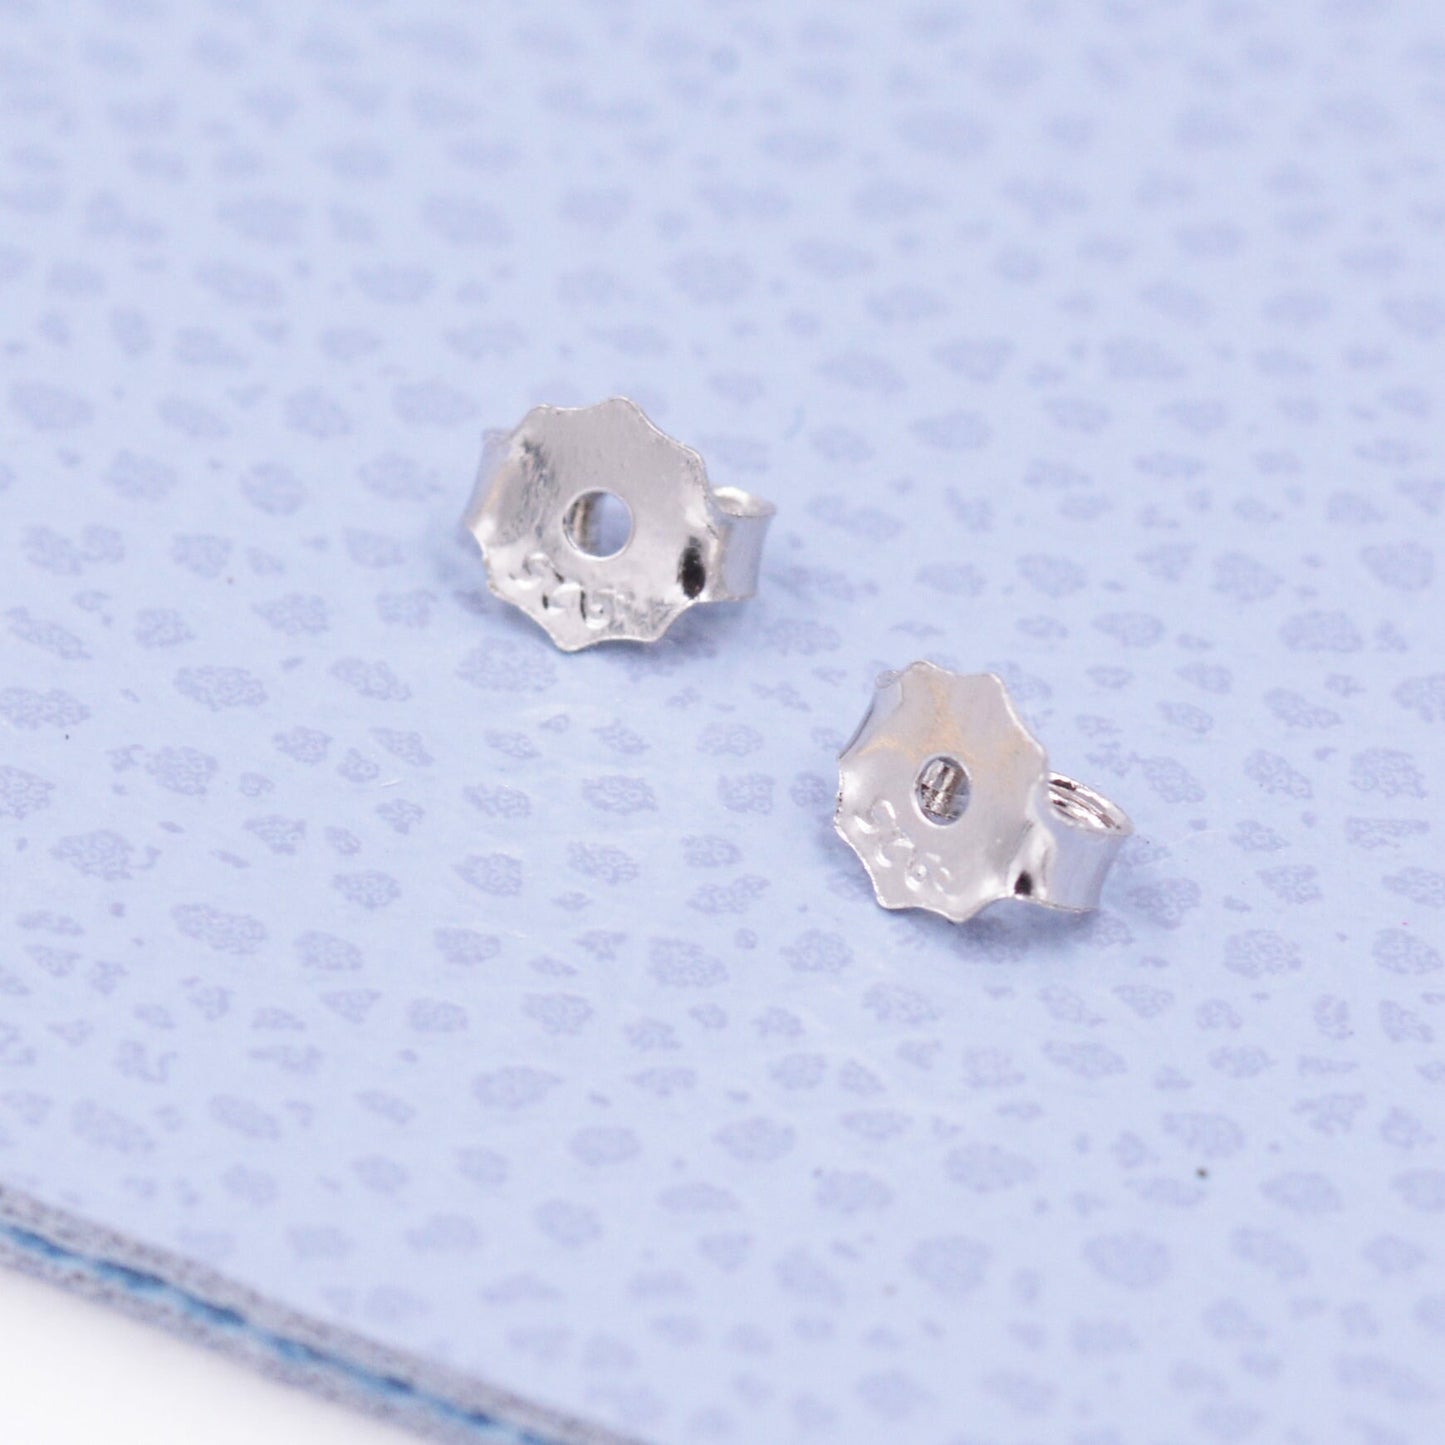 Natural Amethyst Tiny Stud Earrings in Sterling Silver, Rose Cut Amethyst, Gold or Silver, Genuine Gemstone, Minimalist Geometric Design